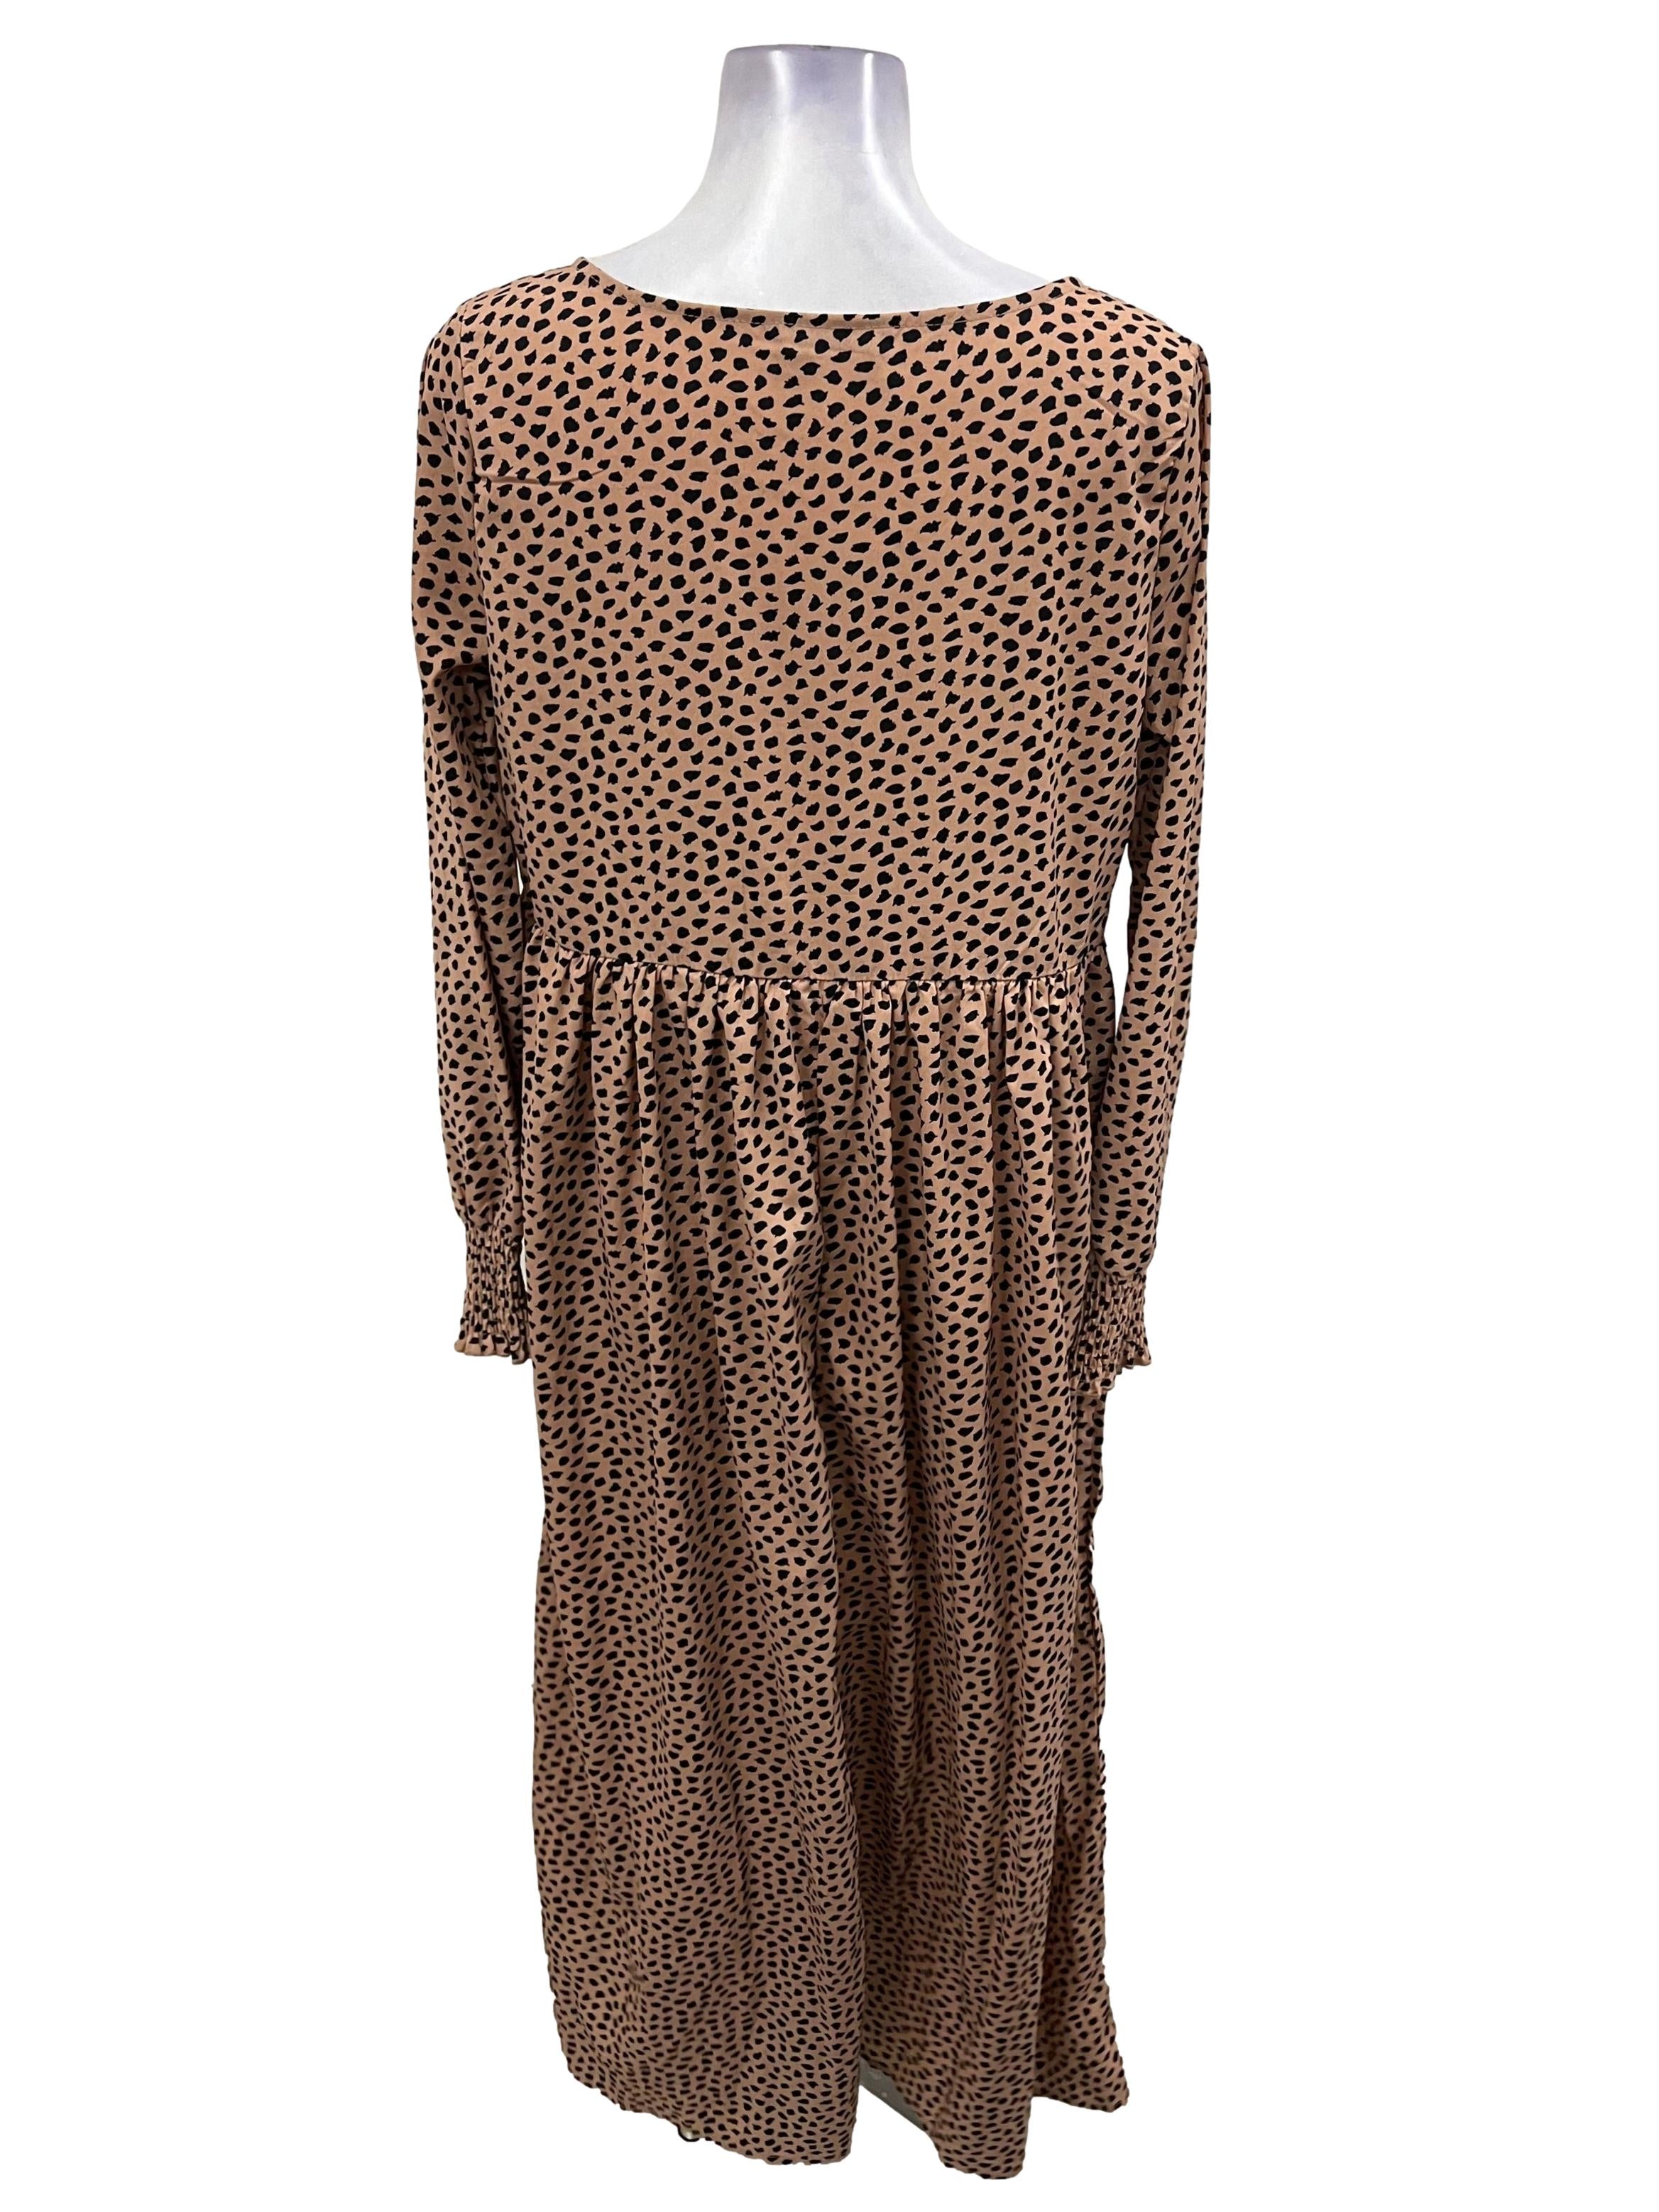 Pink Cheetah Print Dress